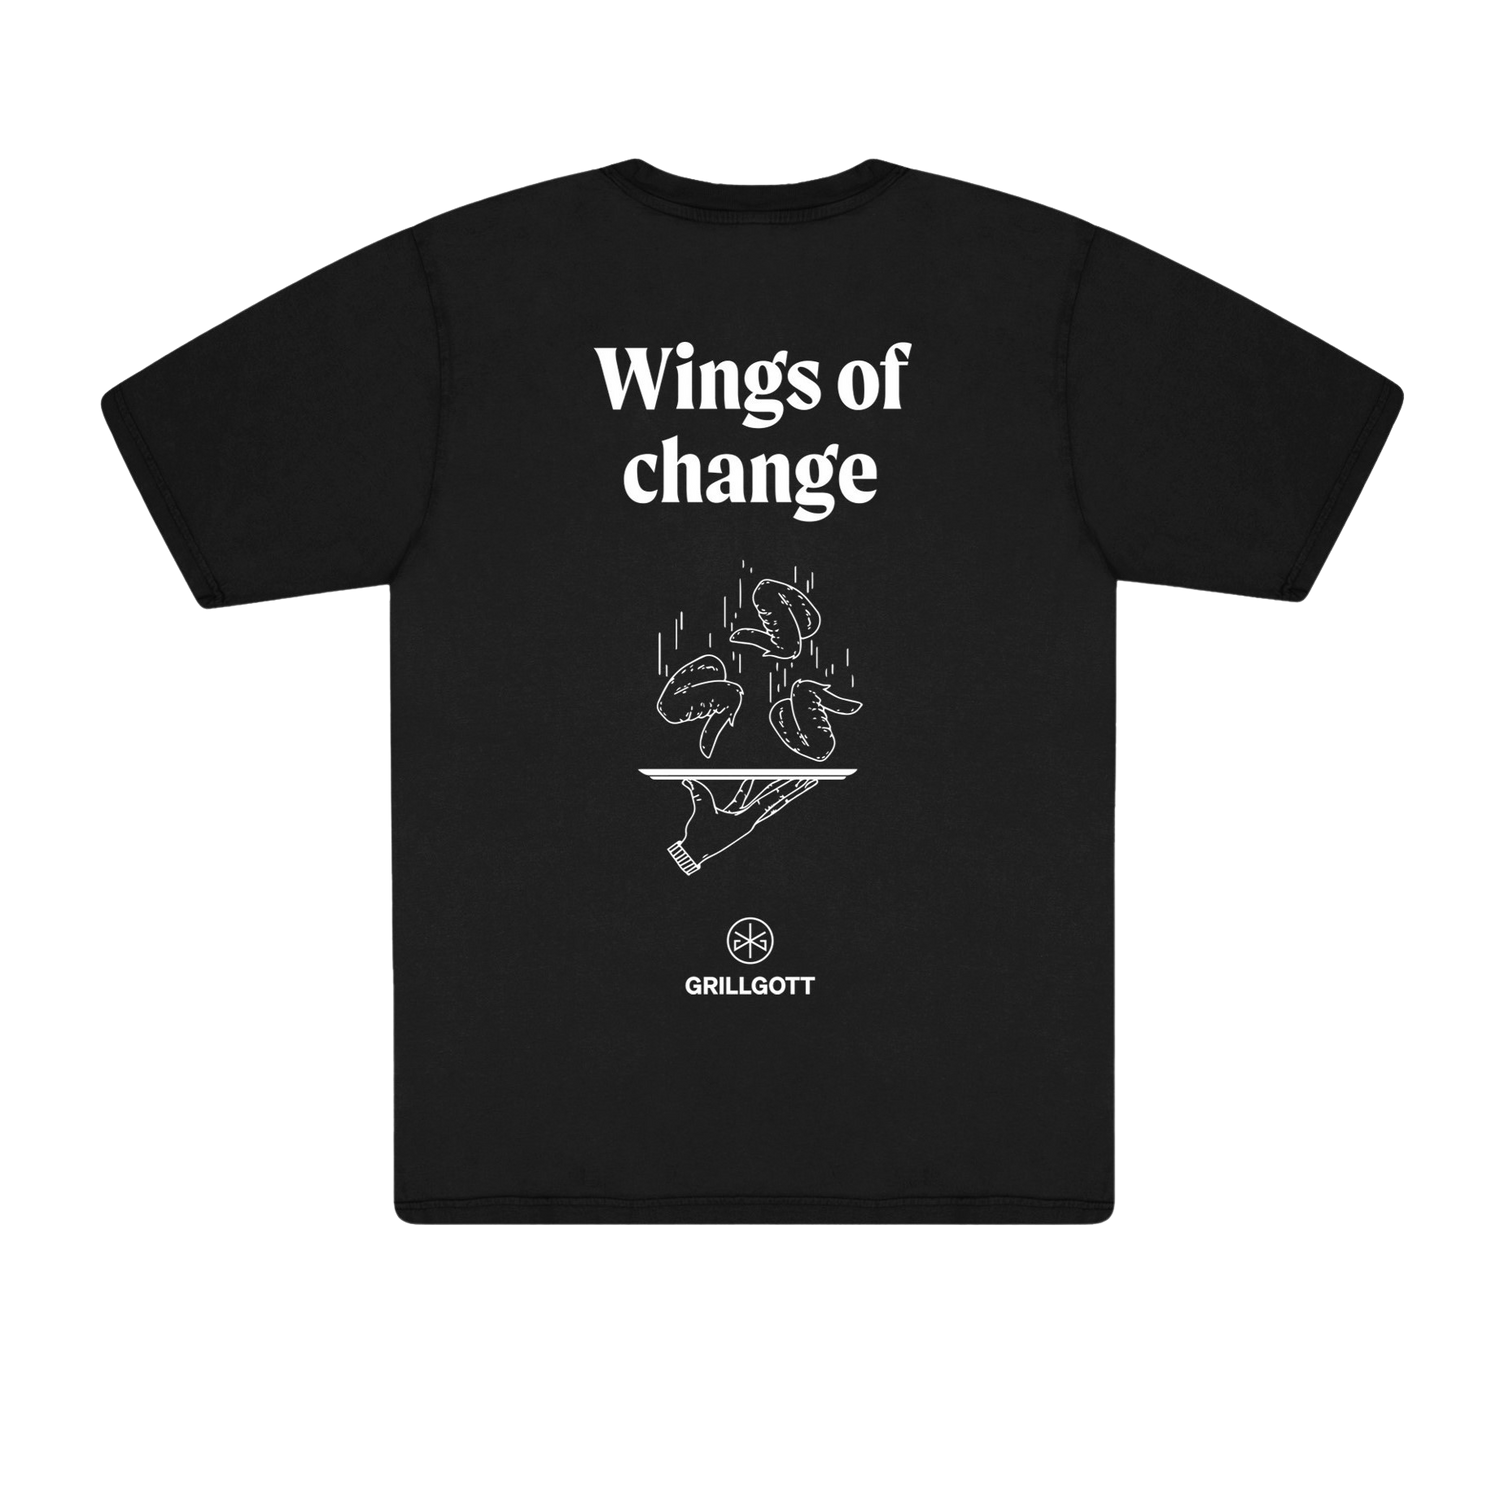 Grillgott T-Shirt XL "Wings of change"